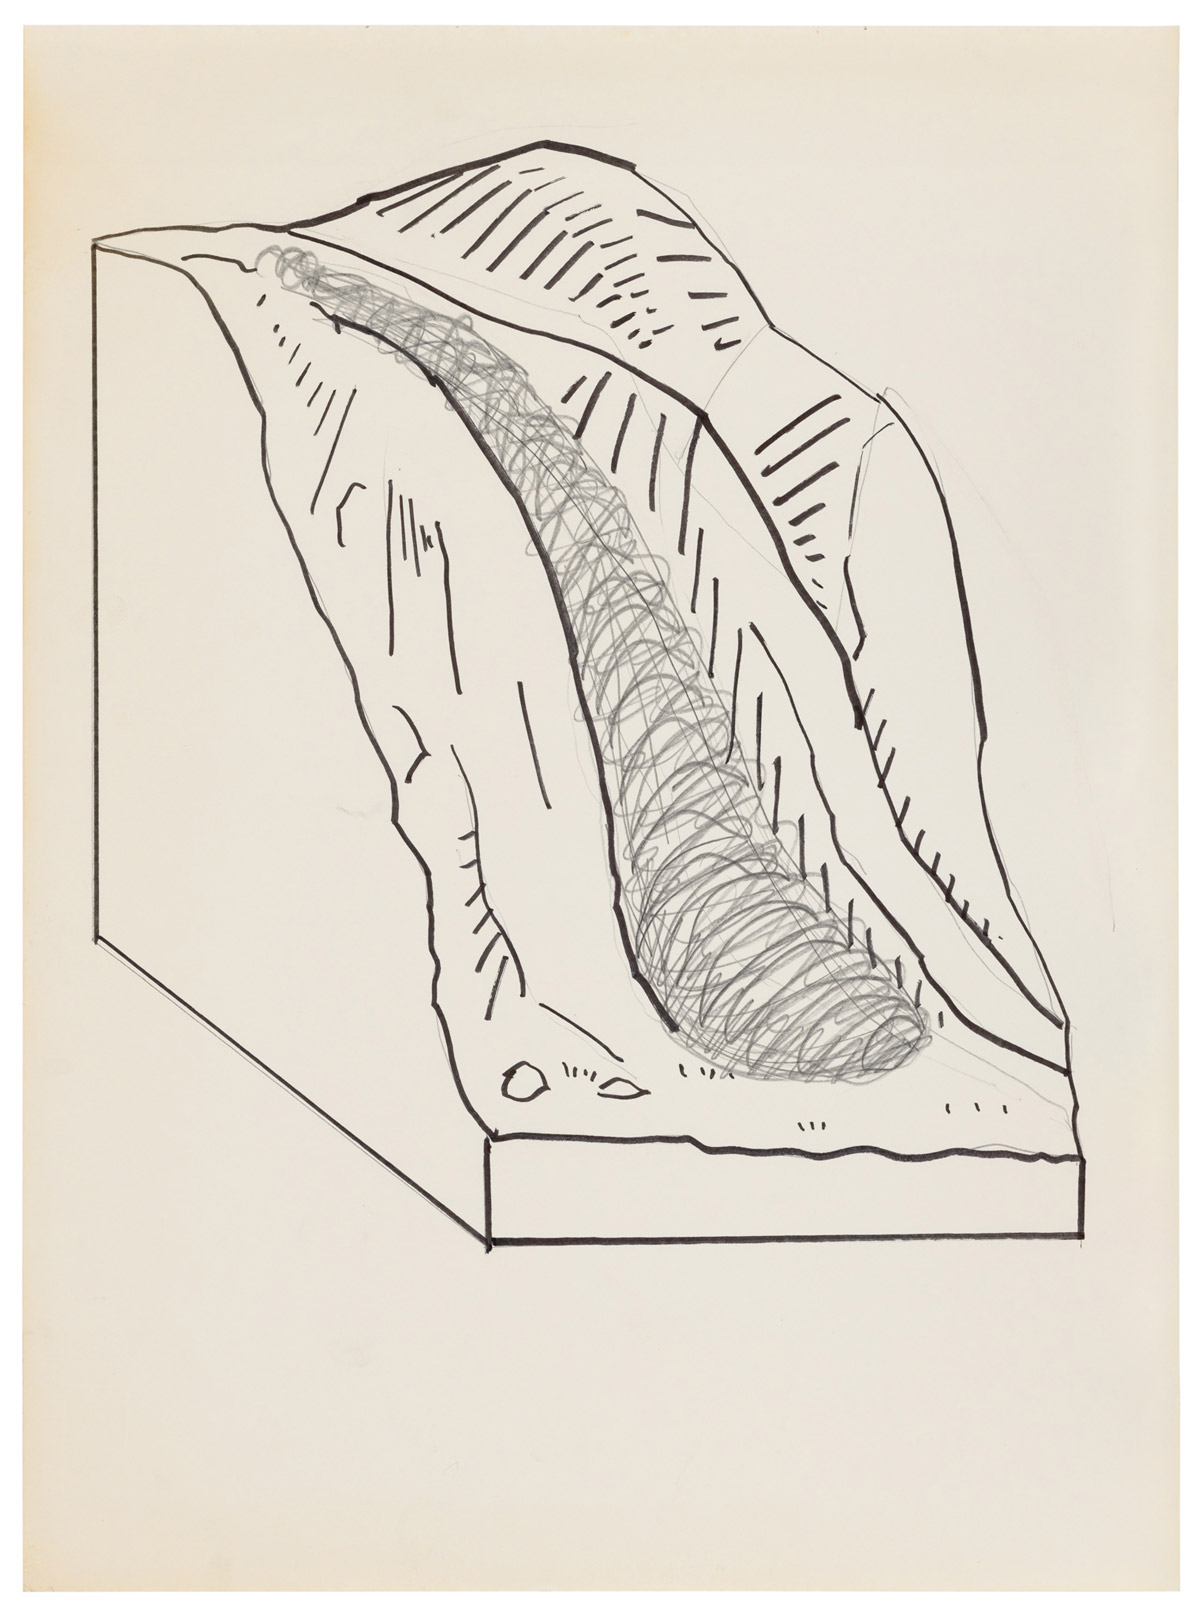 Robert Smithson, Untitled, n.d. 